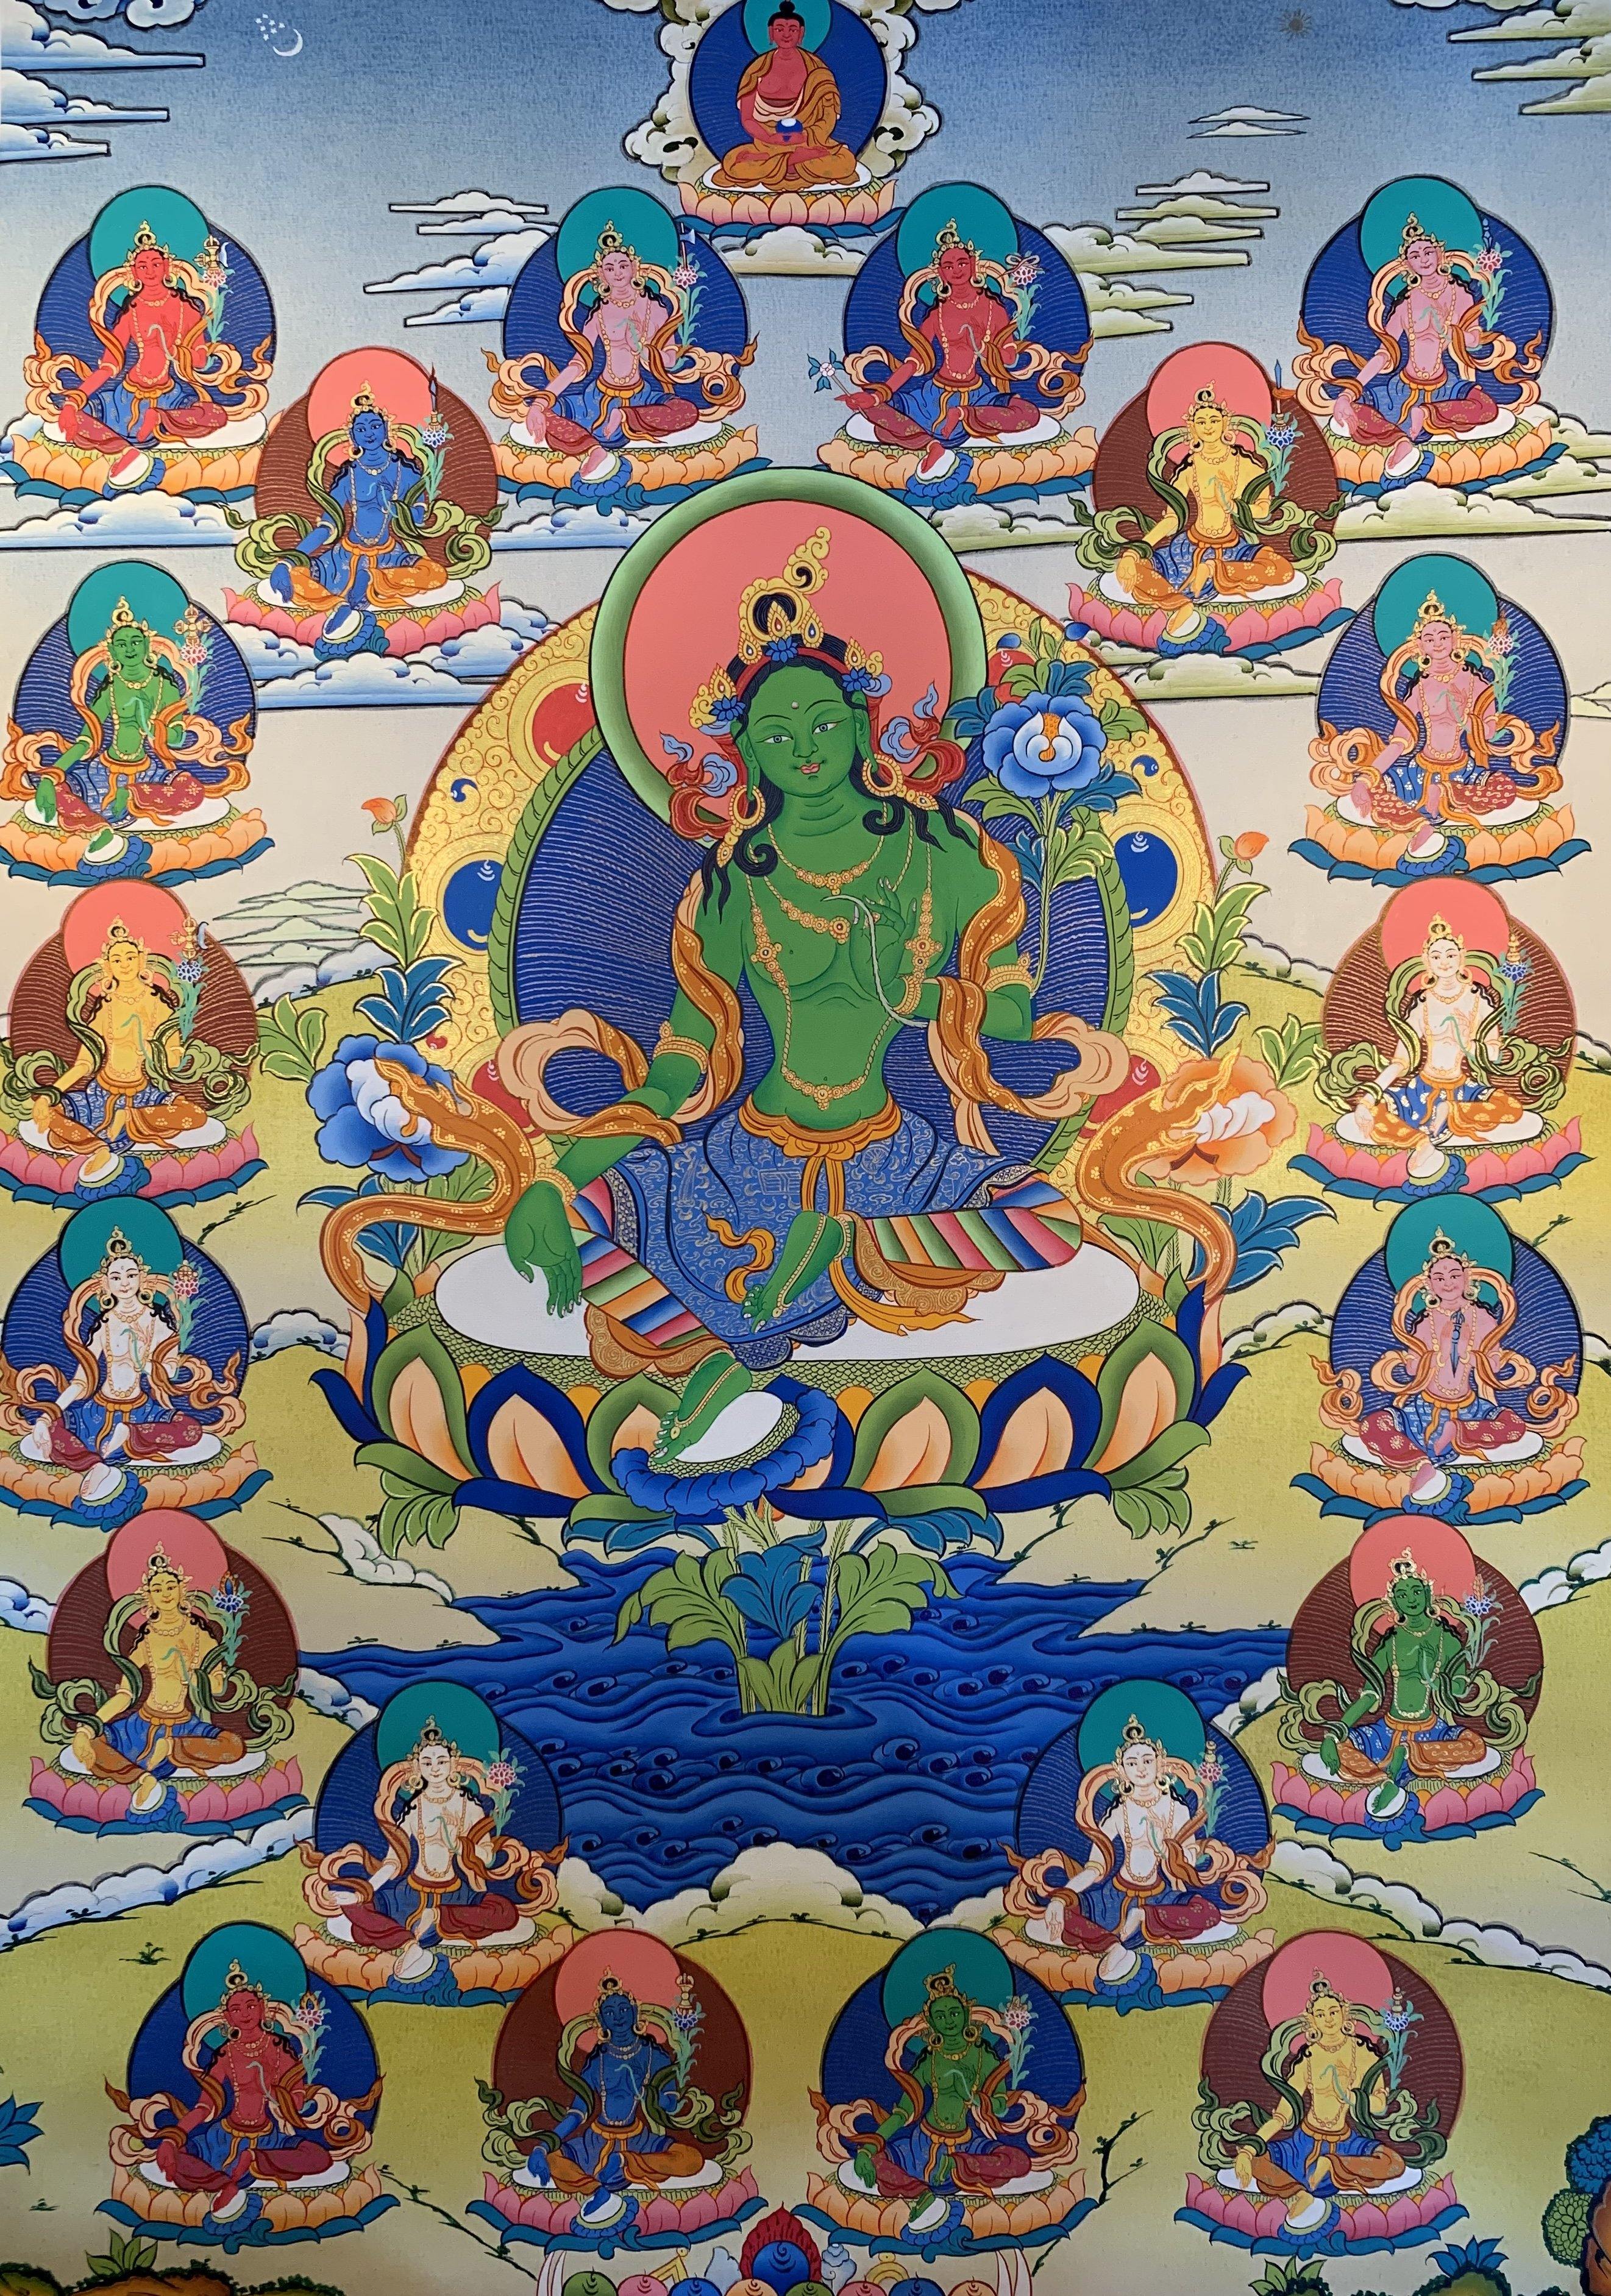 21 Green Tara Thangka Painting 60*45 - The Thangka